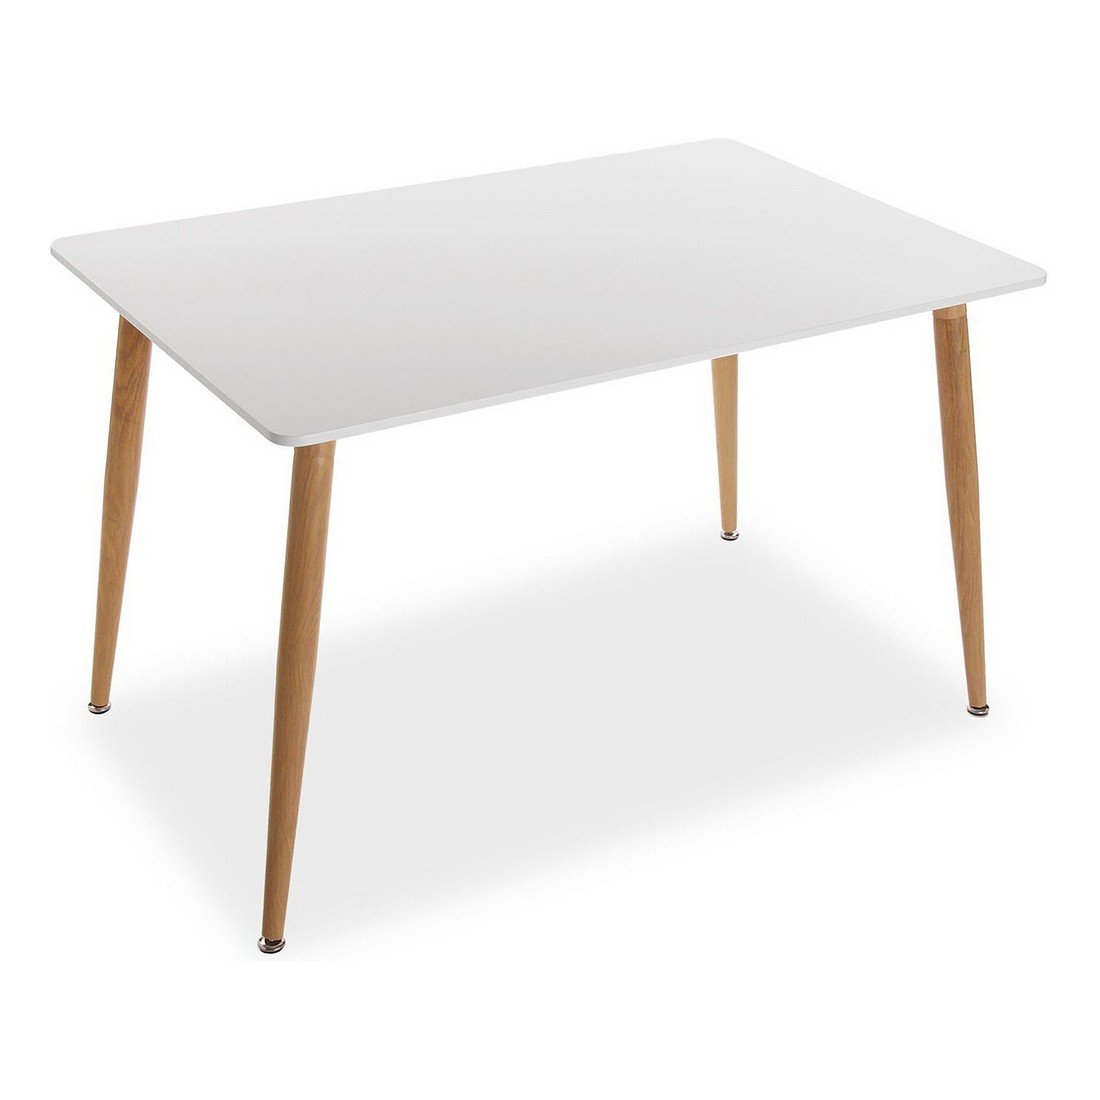 Anika White and Wood Scandinavian Table